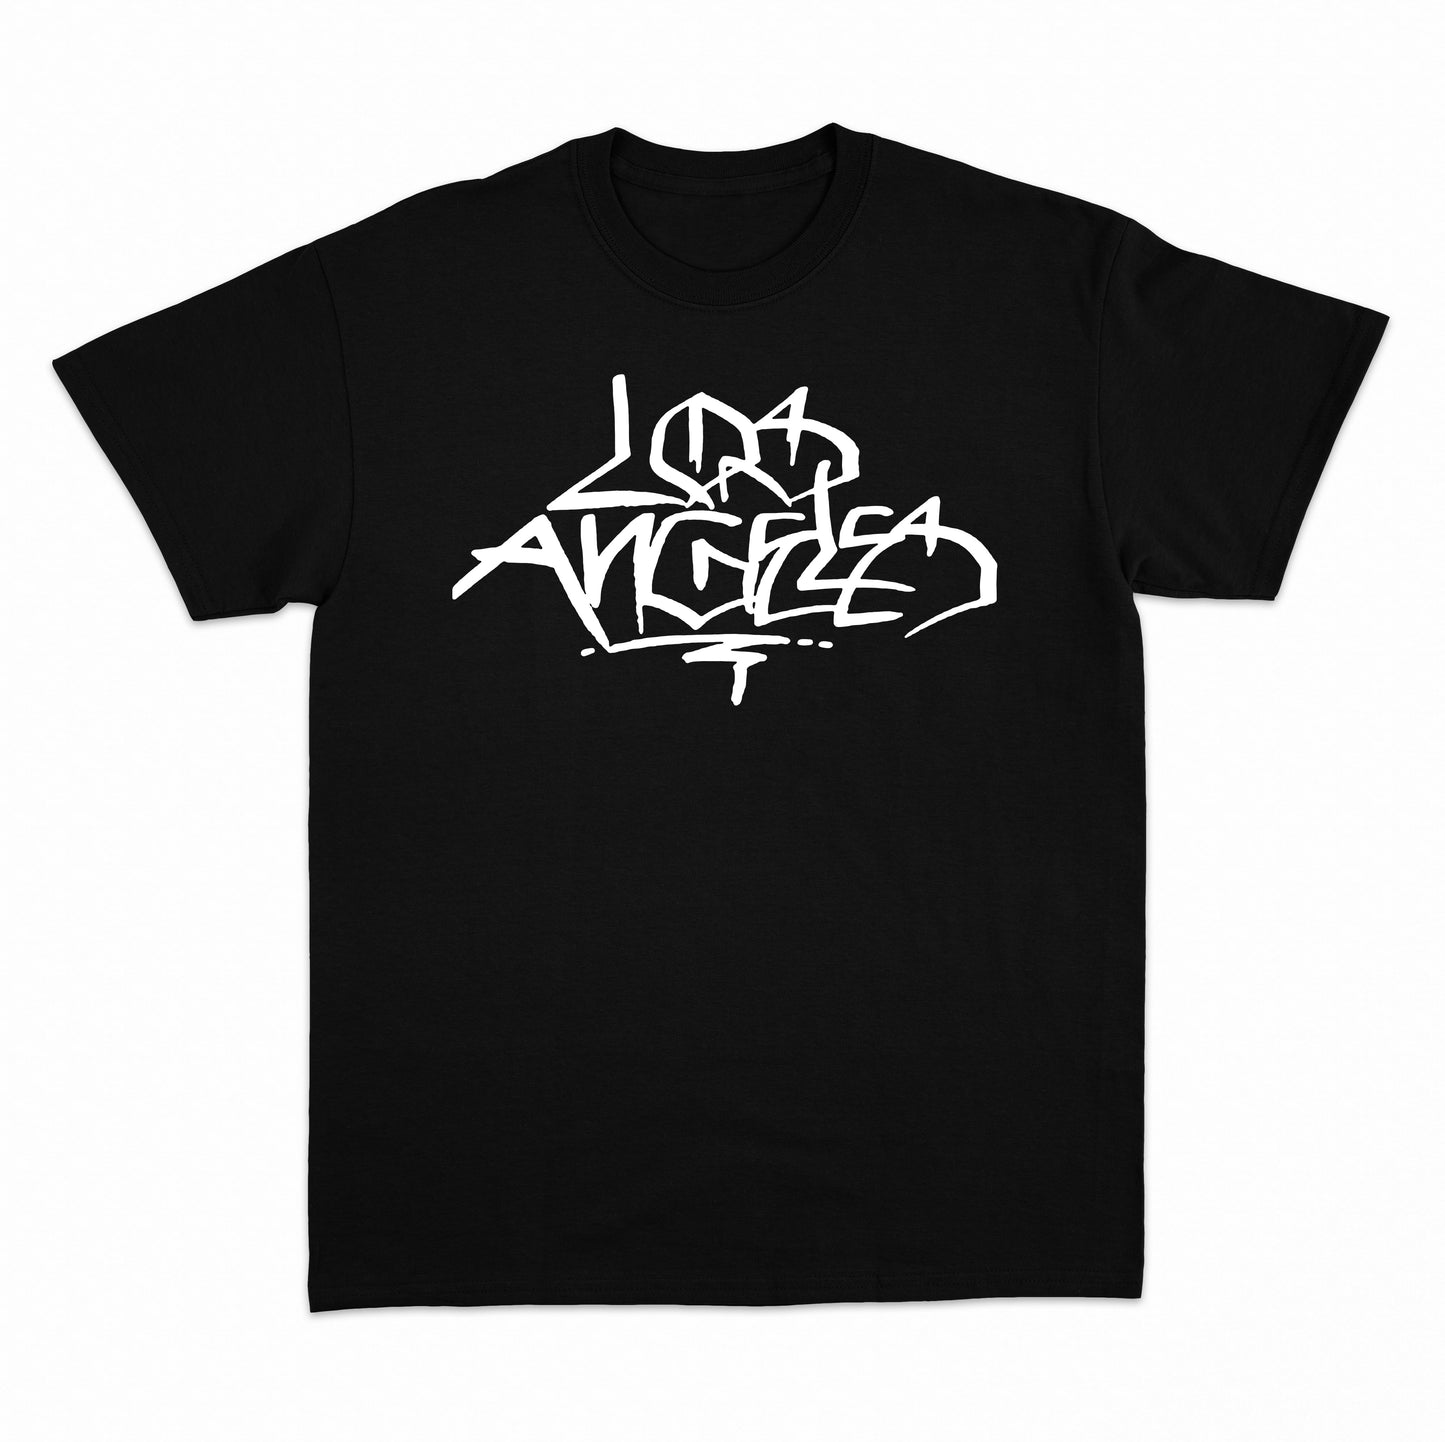 THE LOS ANGELES MEN'S T-SHIRT - Bboy clothing brand